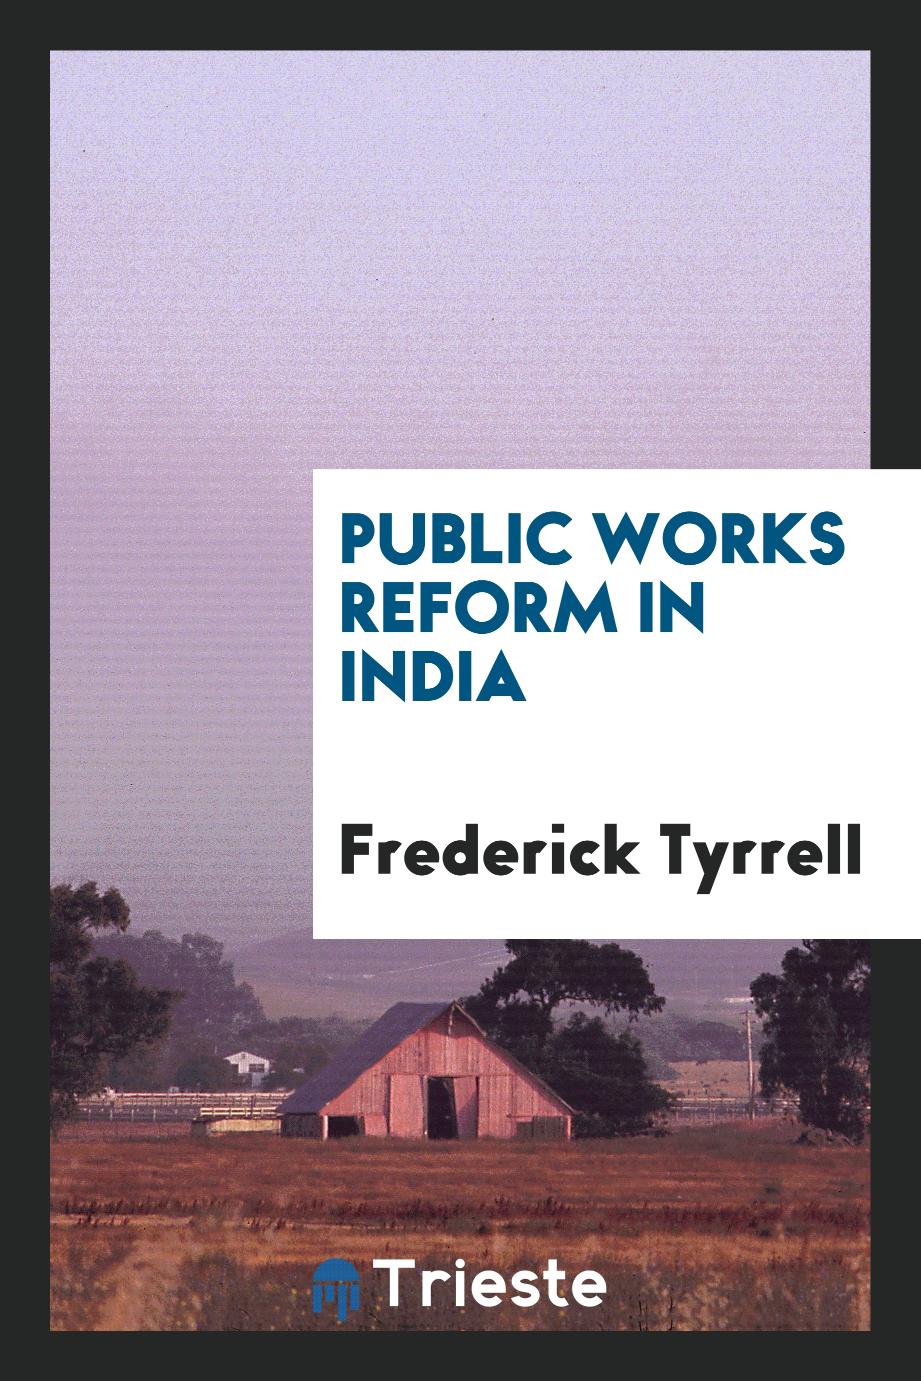 Public works reform in India